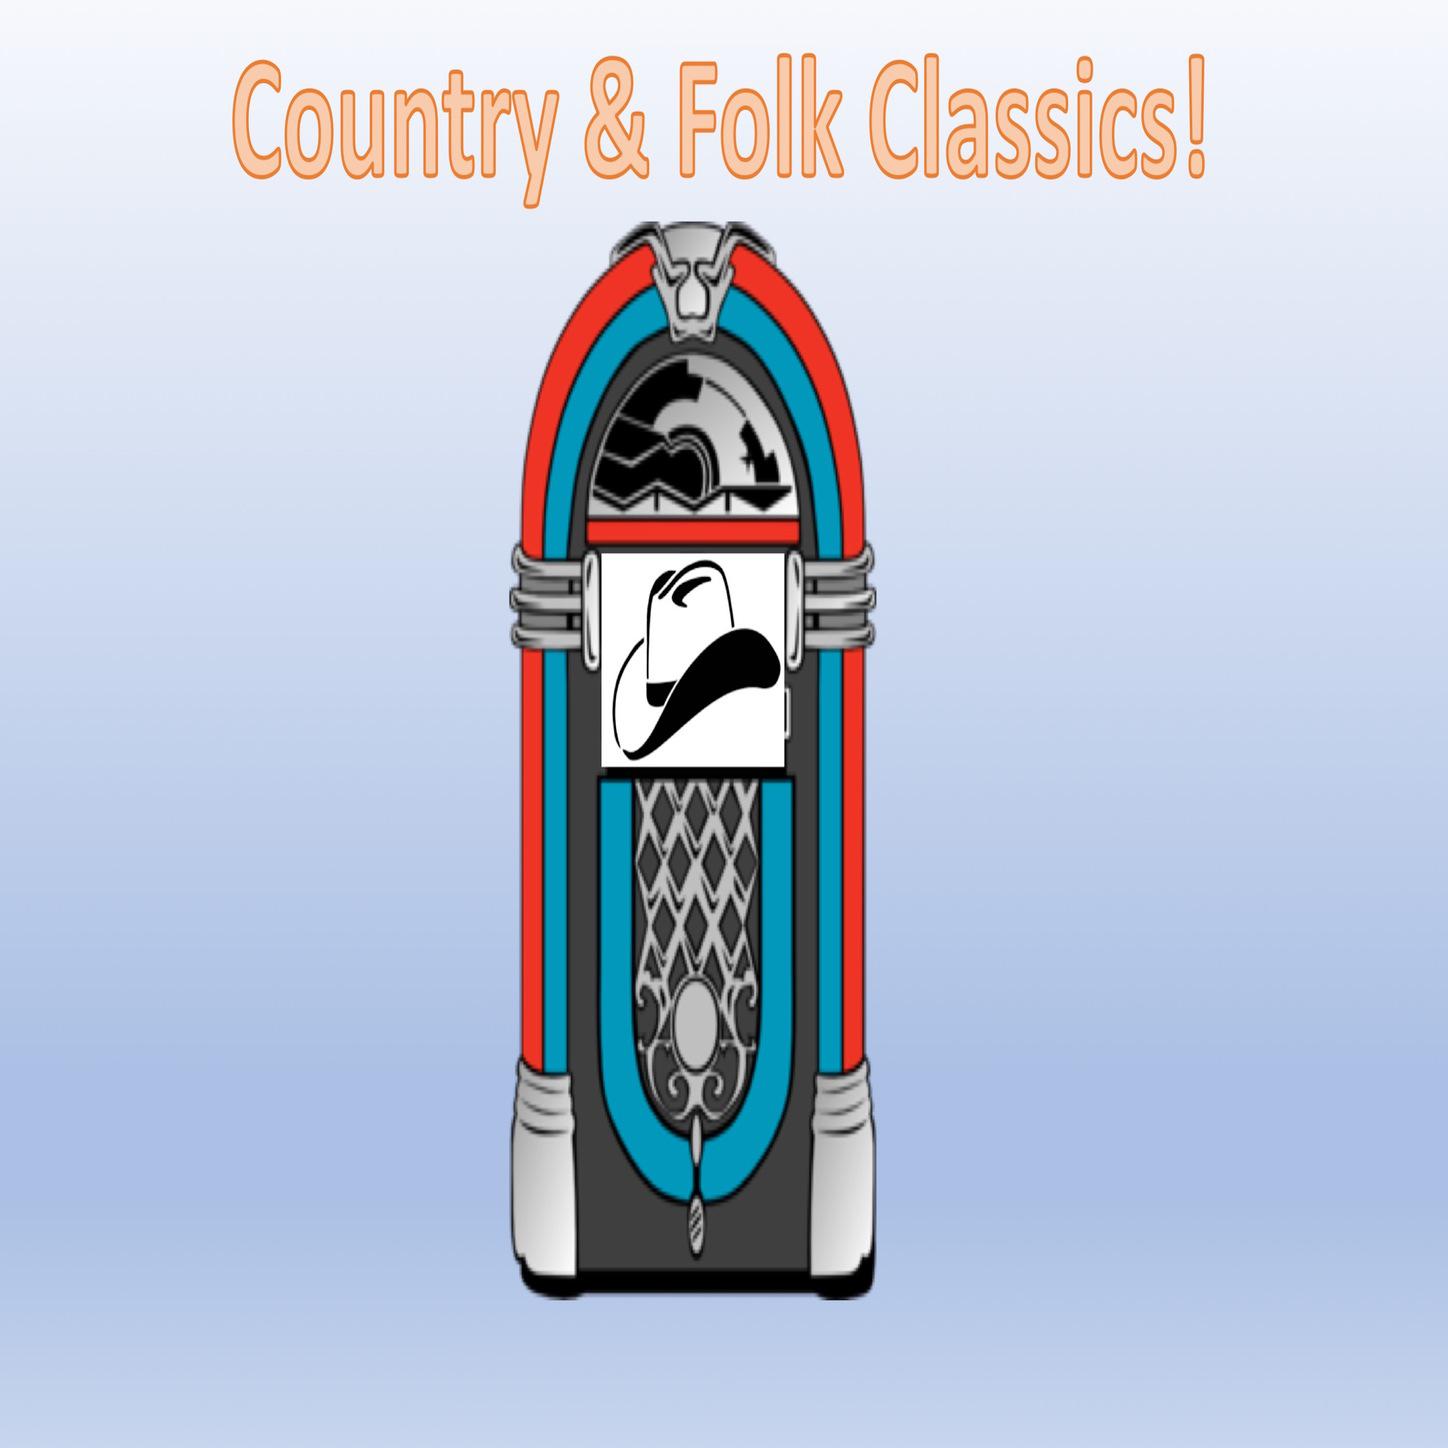 Country & Folk Classics of 1964